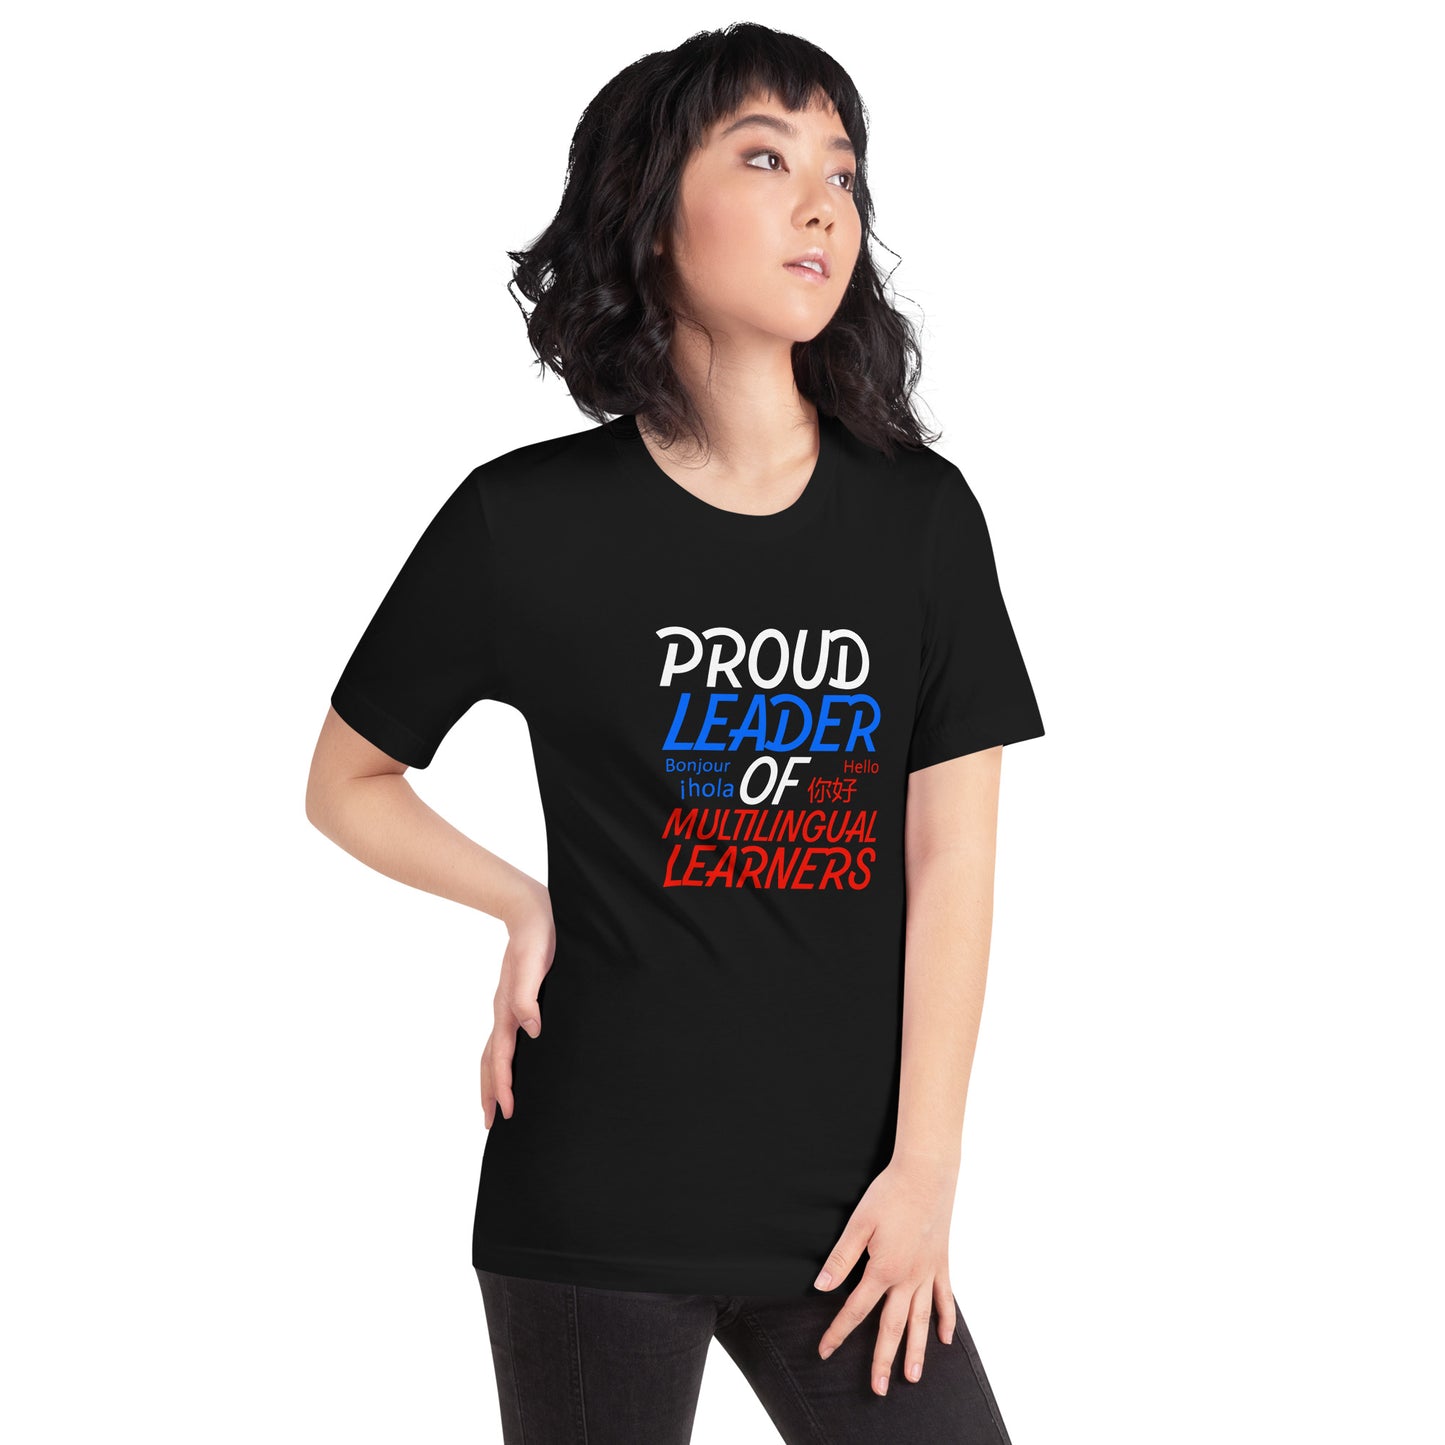 Camiseta de líder orgulloso